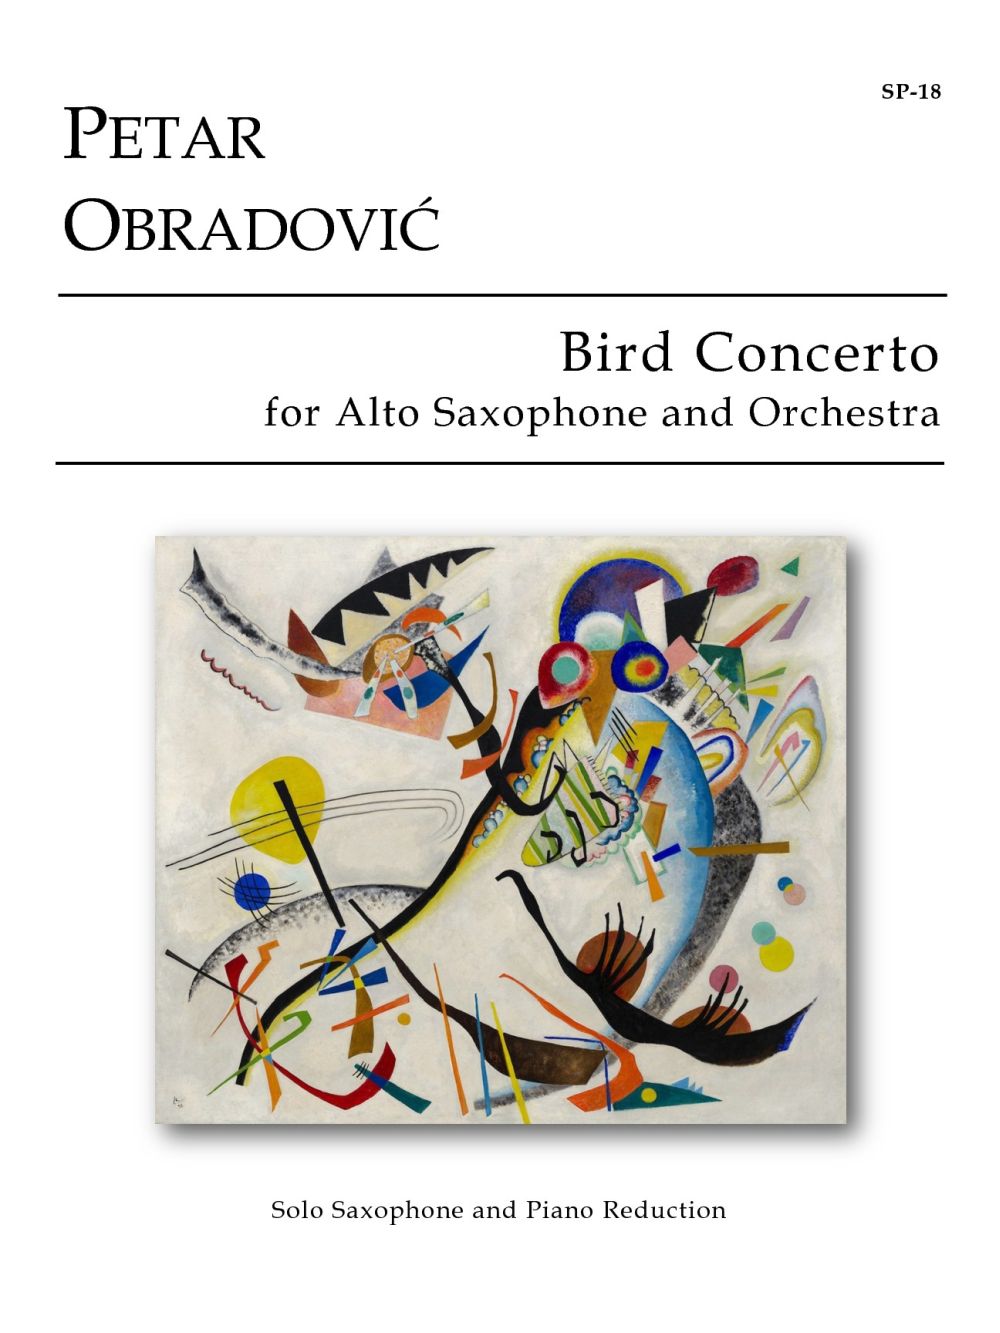 Bird Concerto For Alto Saxophone And Piano (OBRADOVIC PETAR)